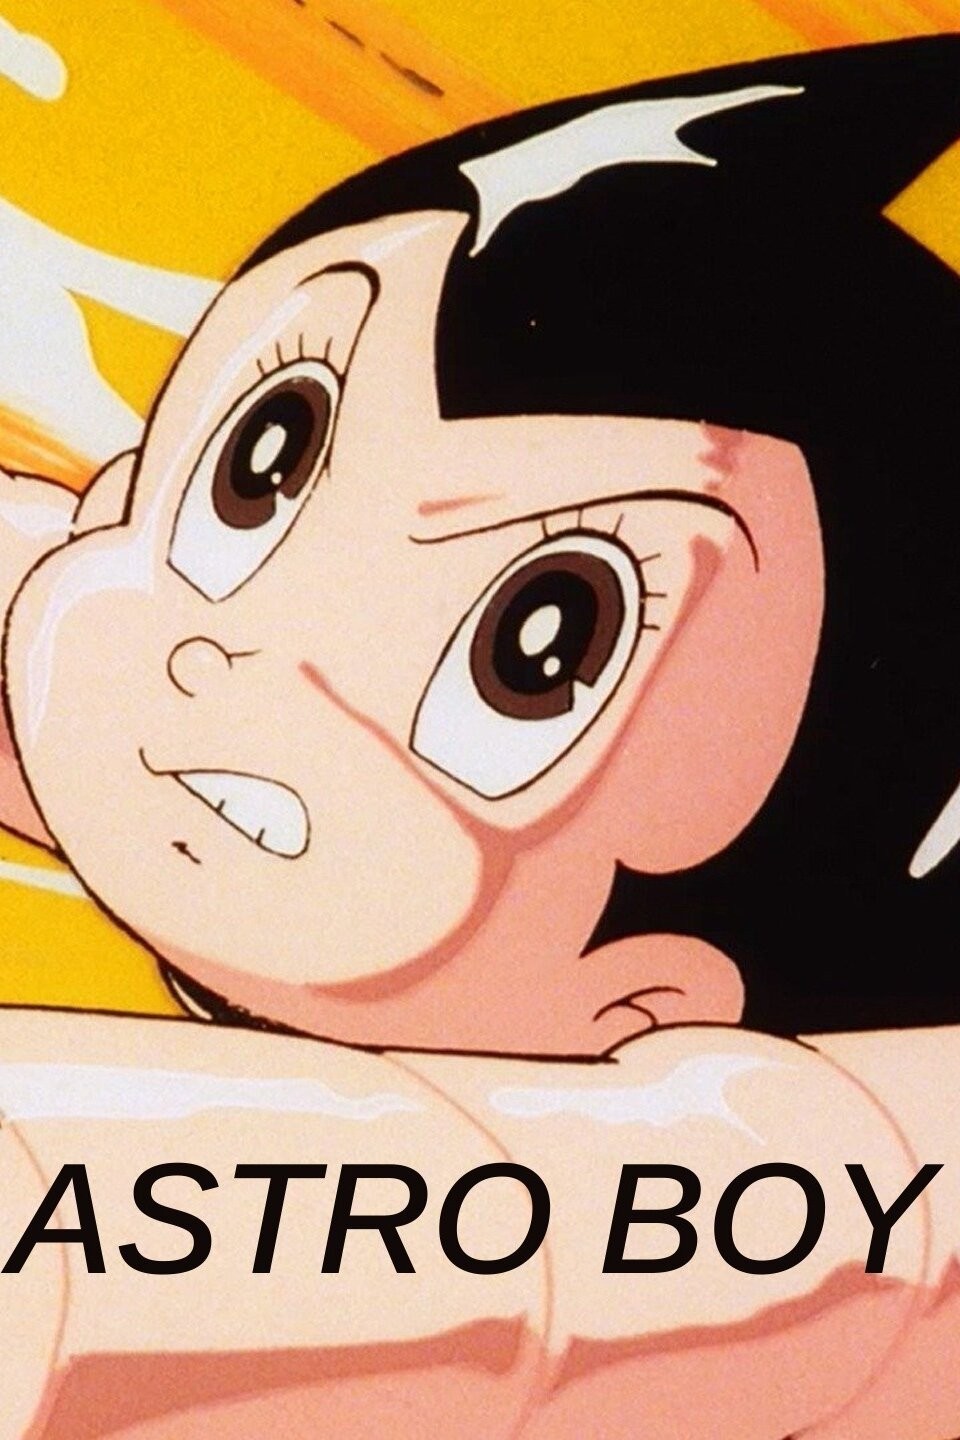 Astro Boy (character) - Wikipedia